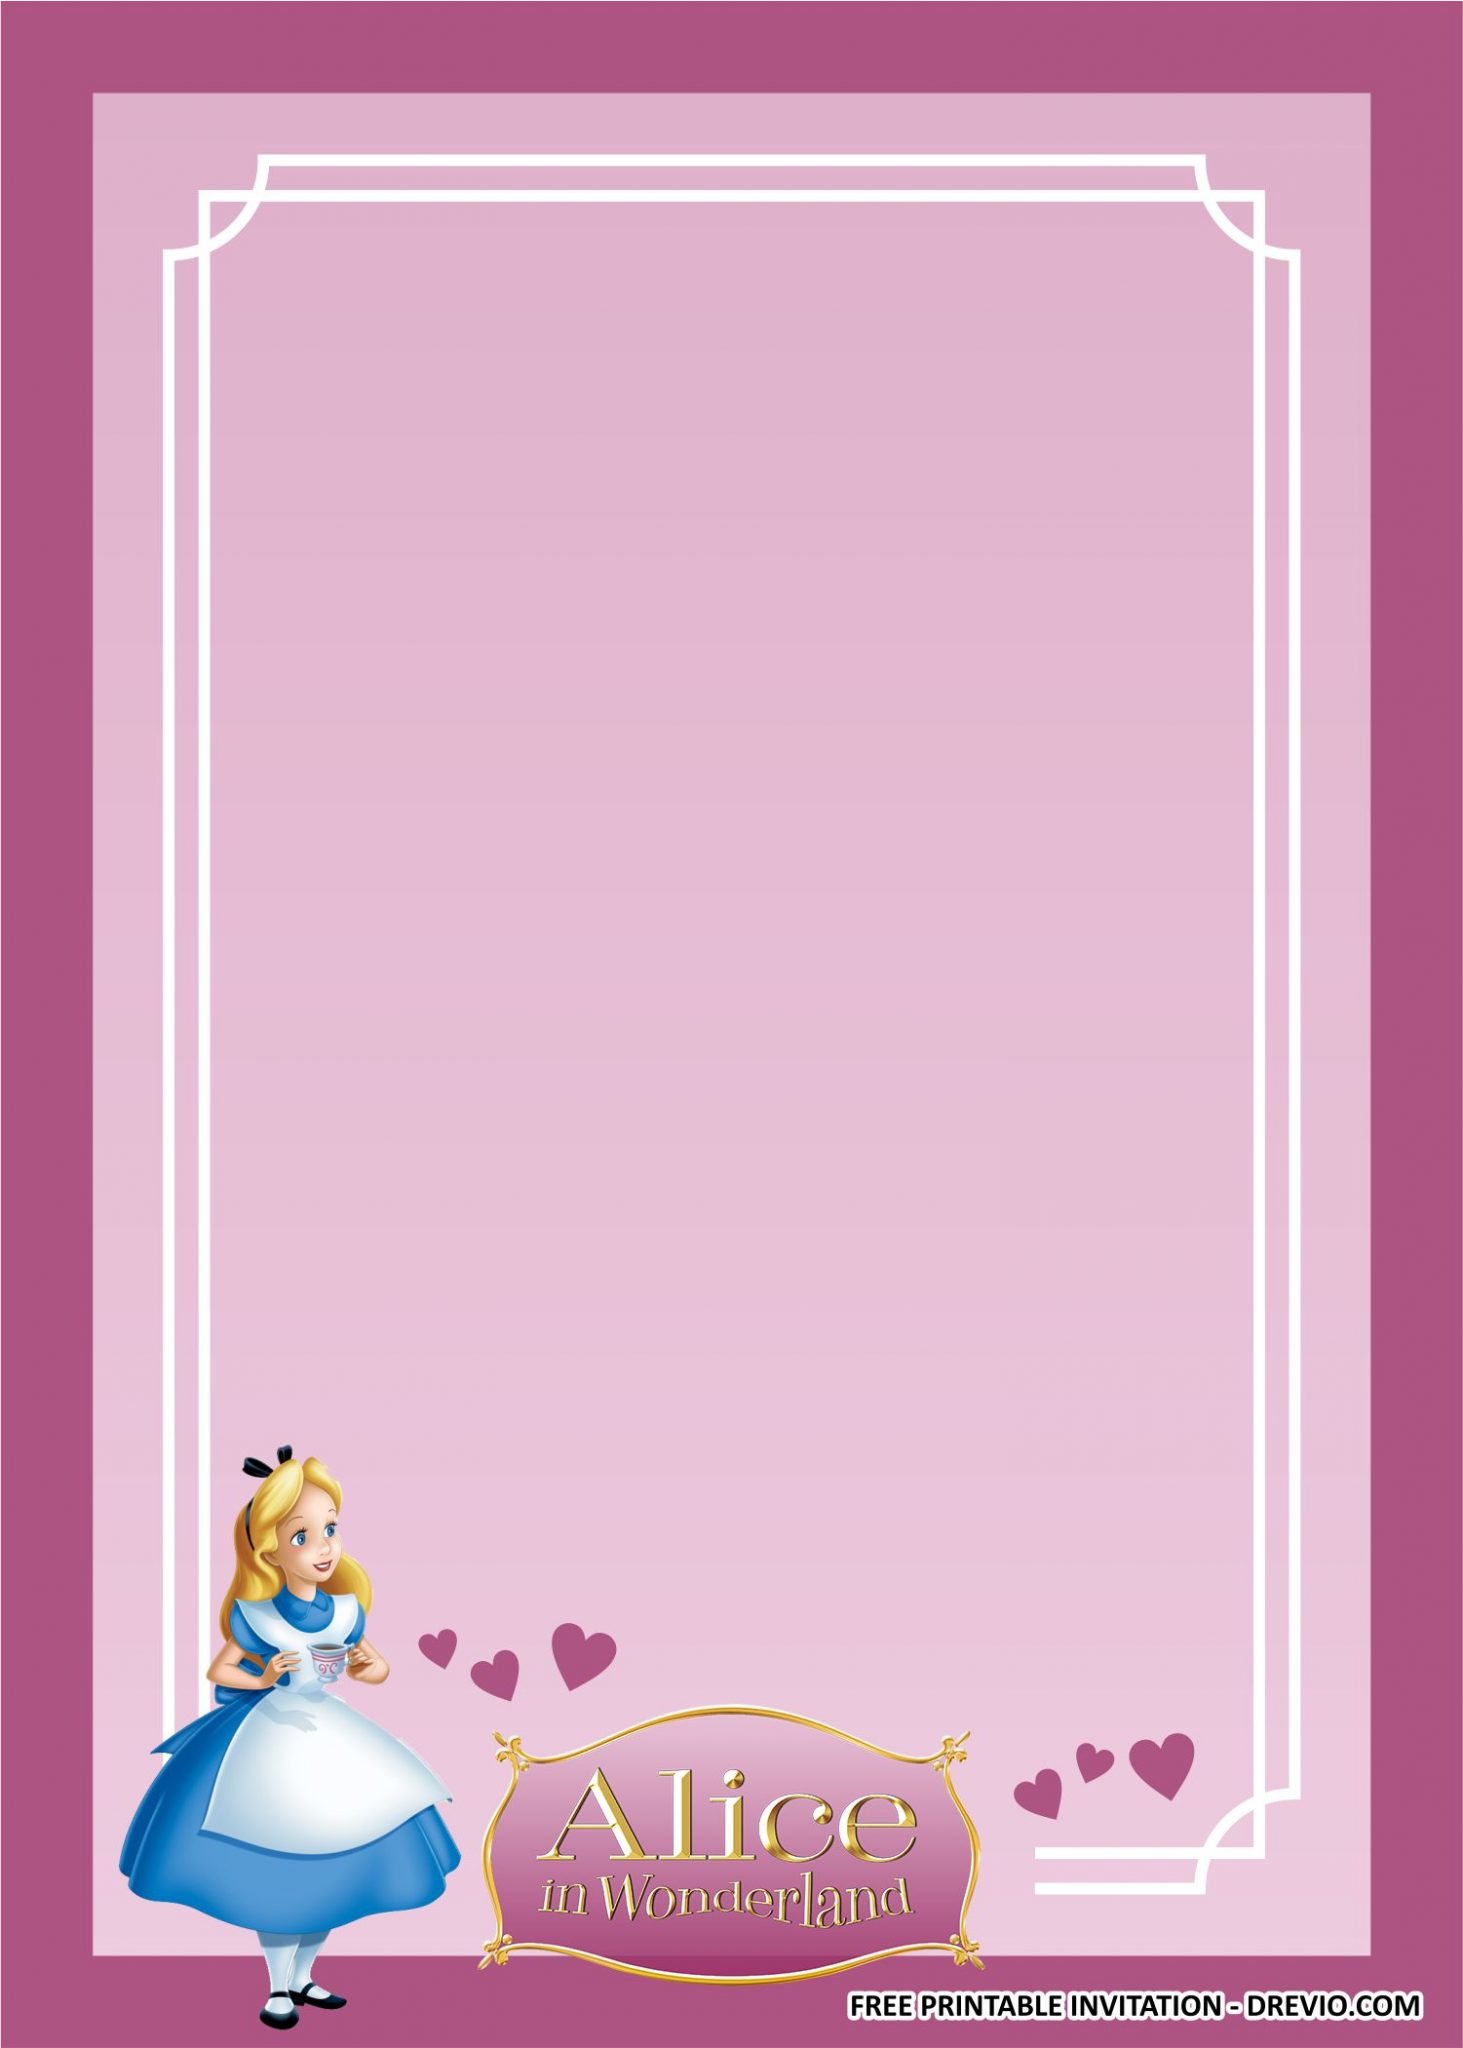 (FREE PRINTABLE) – Alice in Wonderland Birthday Party Kits Template ...